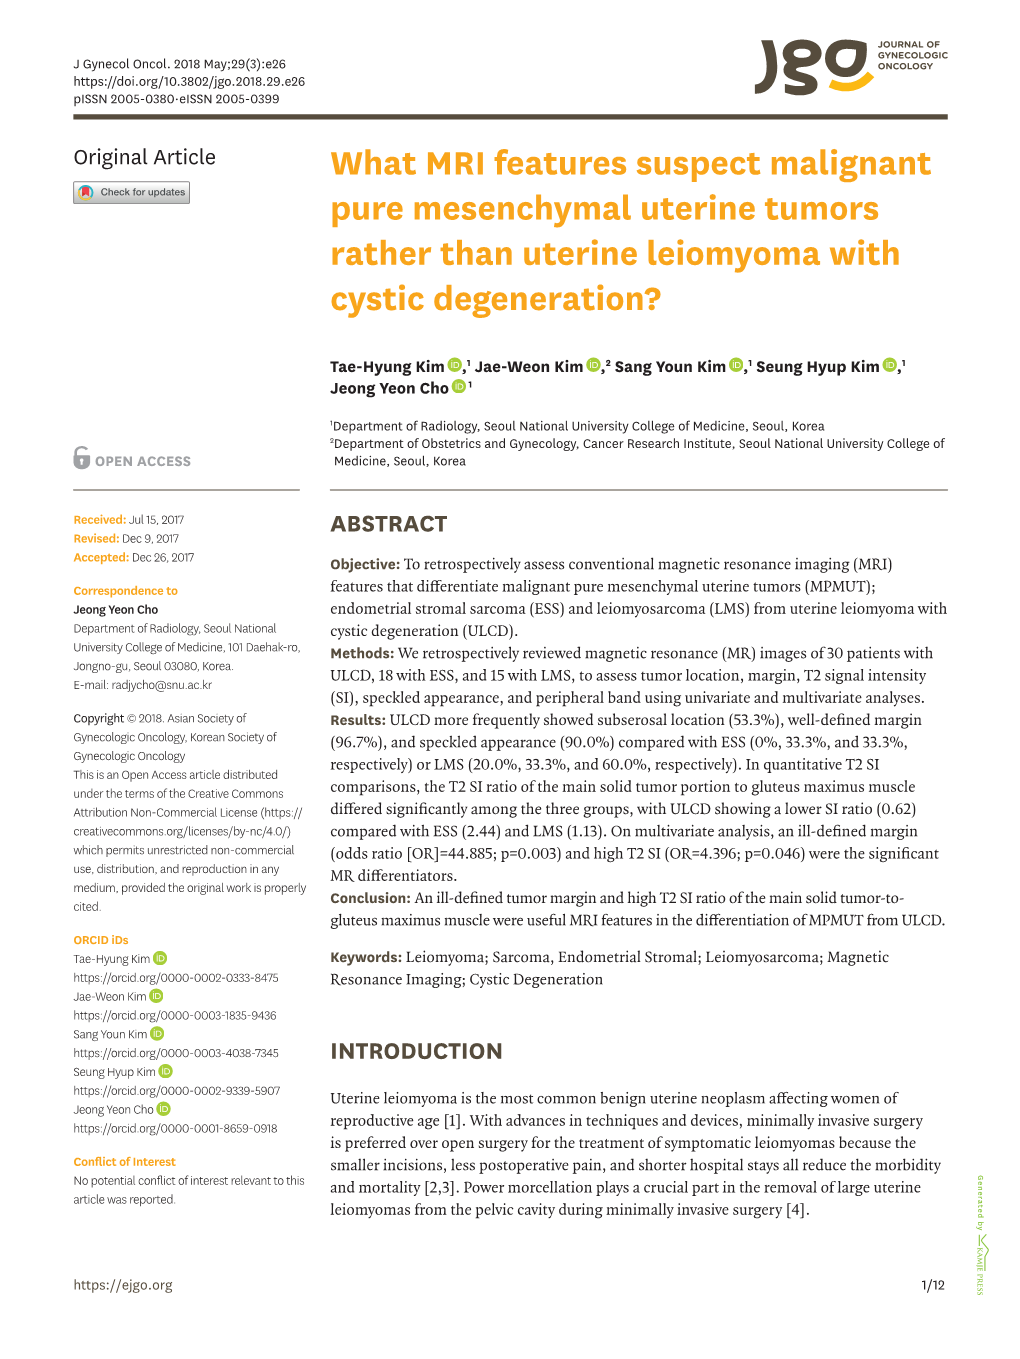 What MRI Features Suspect Malignant Pure Mesenchymal Uterine Tumors Rather Than Uterine Leiomyoma with Cystic Degeneration?